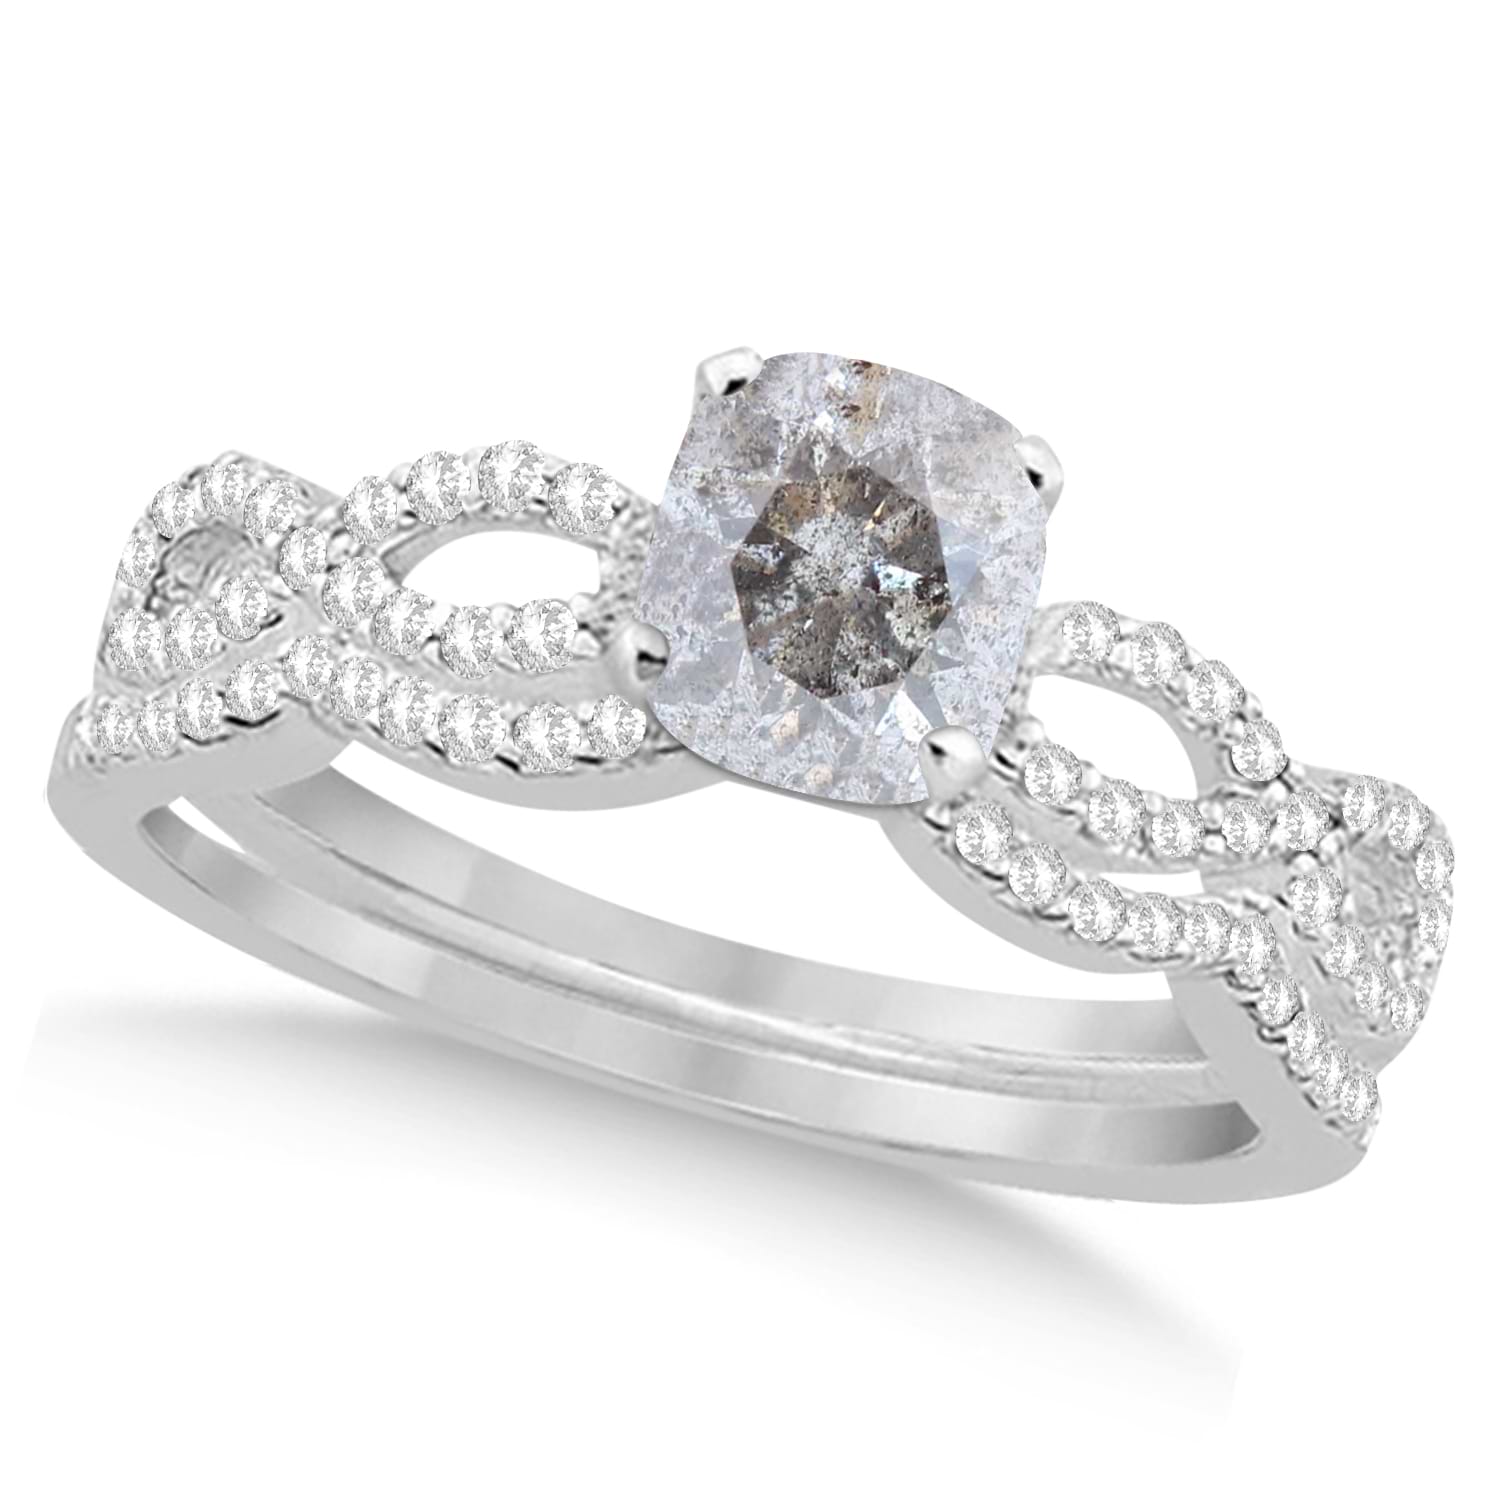 Infinity Cushion-Cut Salt & Pepper Diamond Bridal Ring Set 18k White Gold (1.13ct)